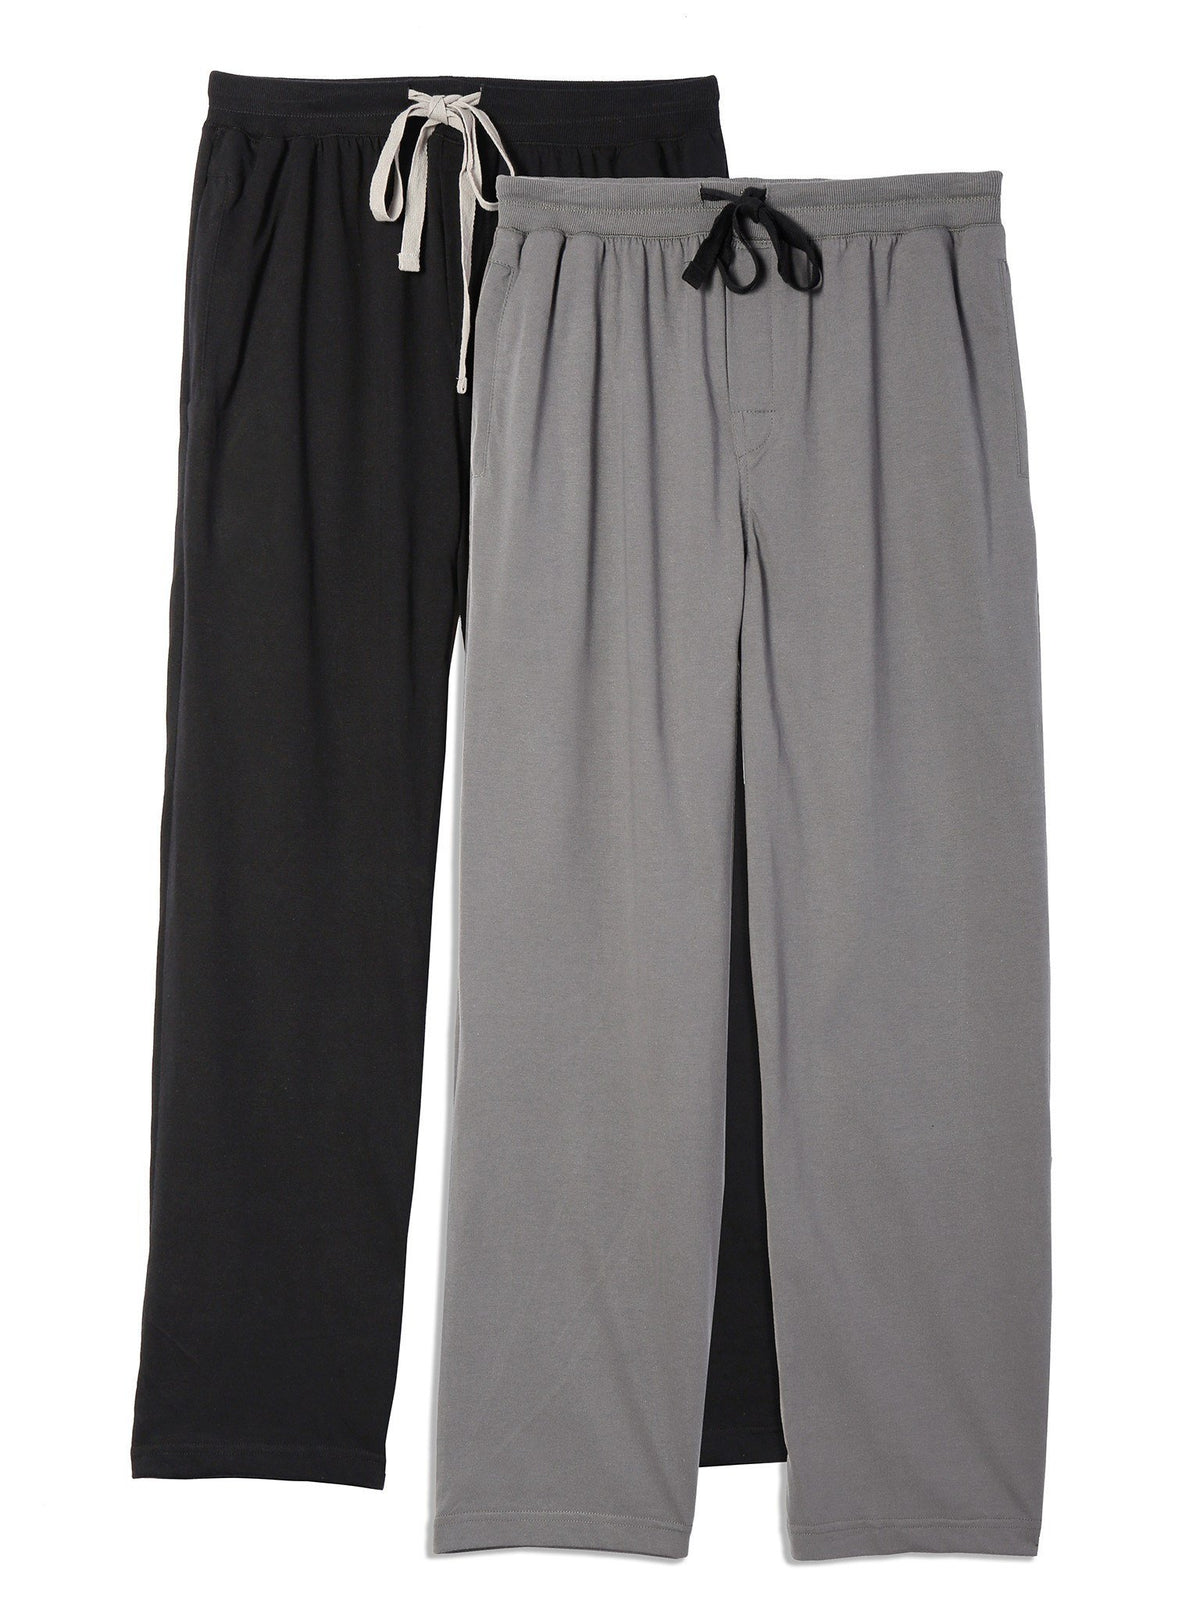 Men's 2-Pack Premium Knit Sleep/Lounge Pants - Charcoal/Black